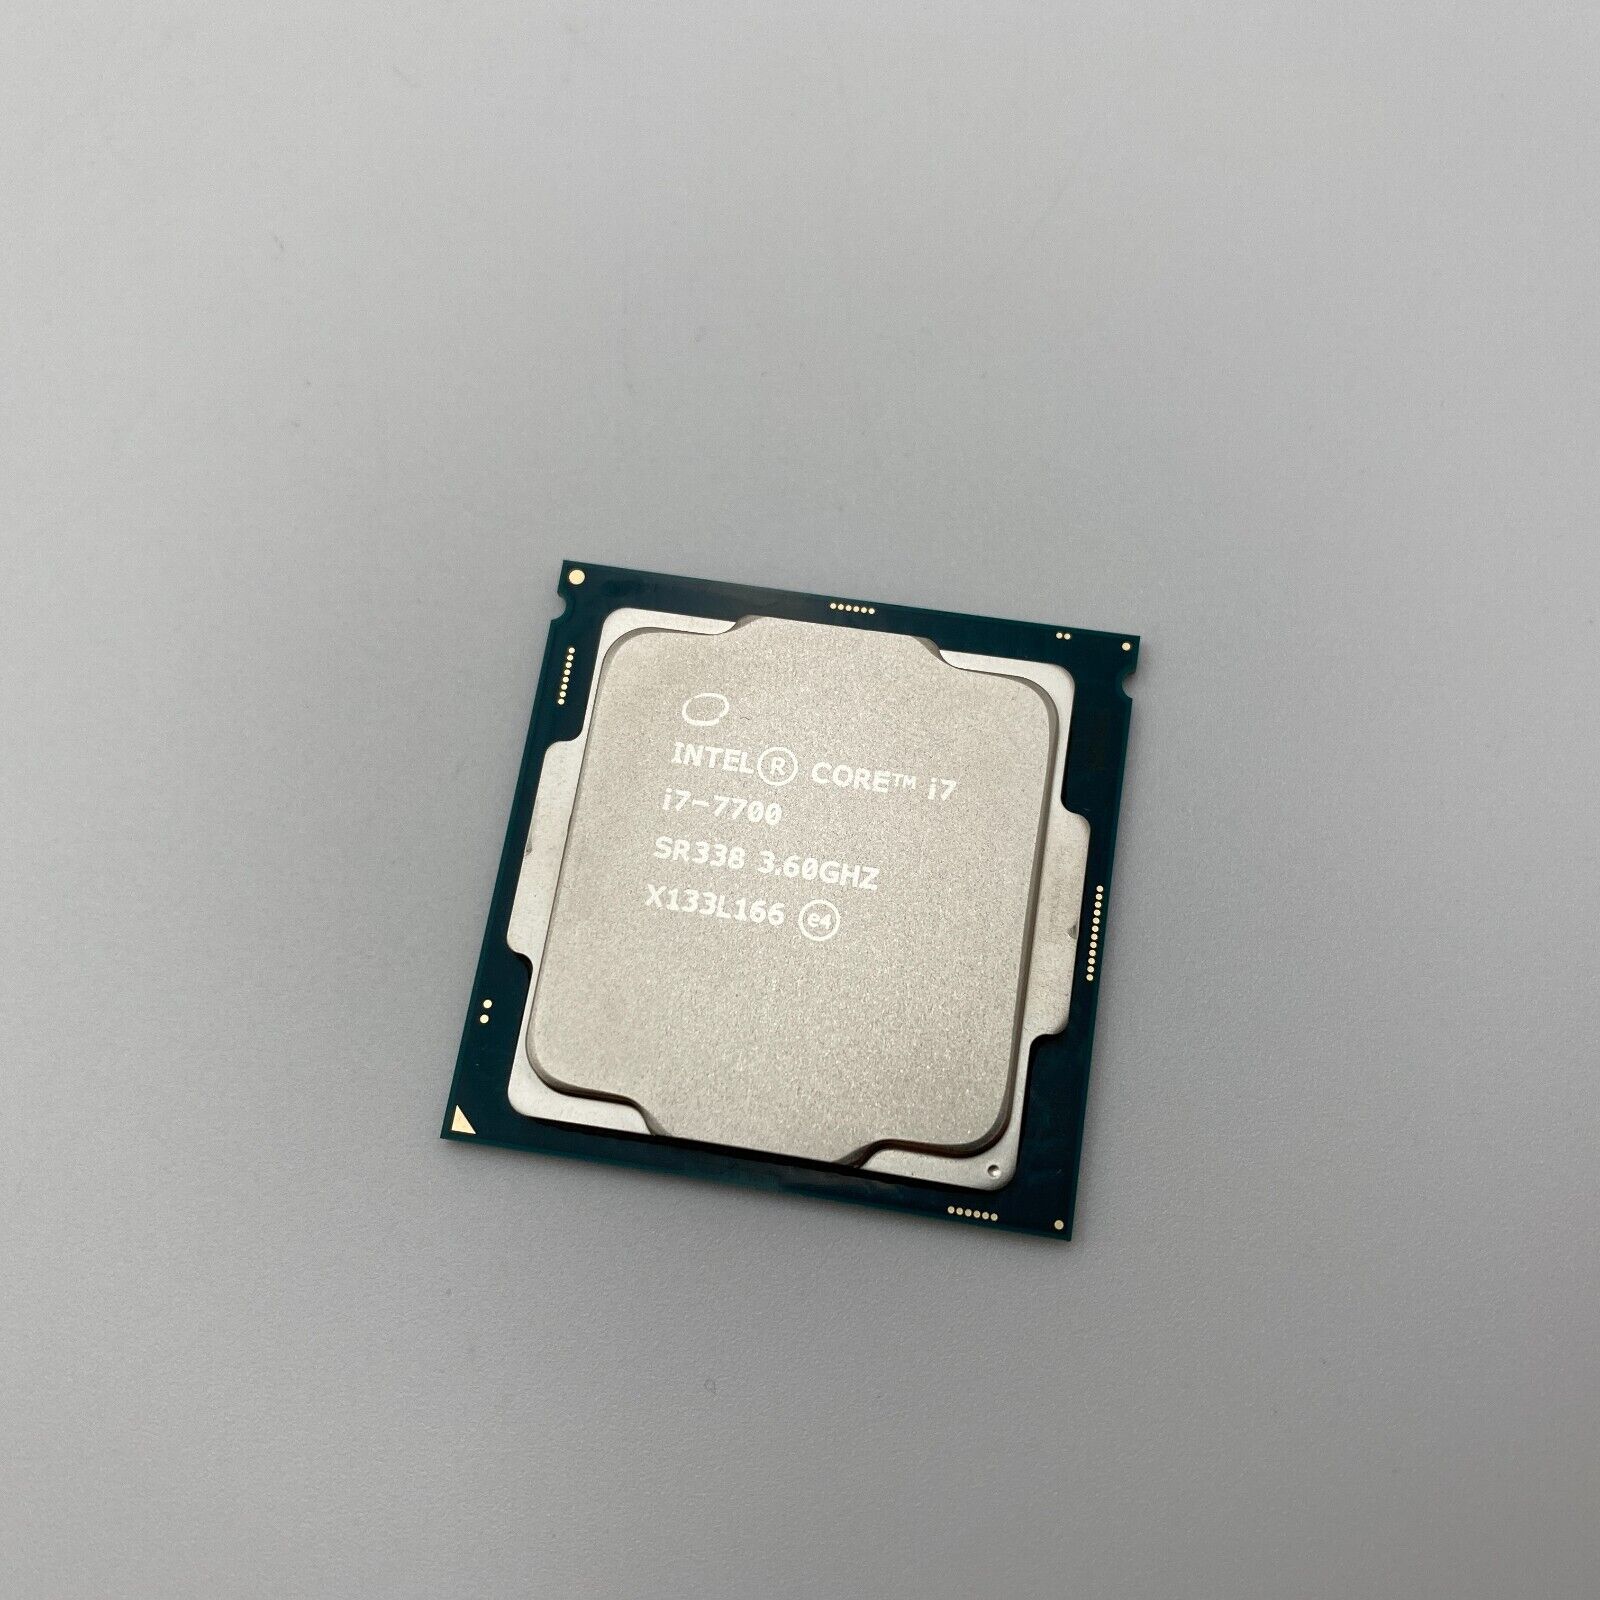 Intel Core i7-7700 Desktop Processor (3.6 GHz, 4 Cores, LGA 1151) Kaby Lake